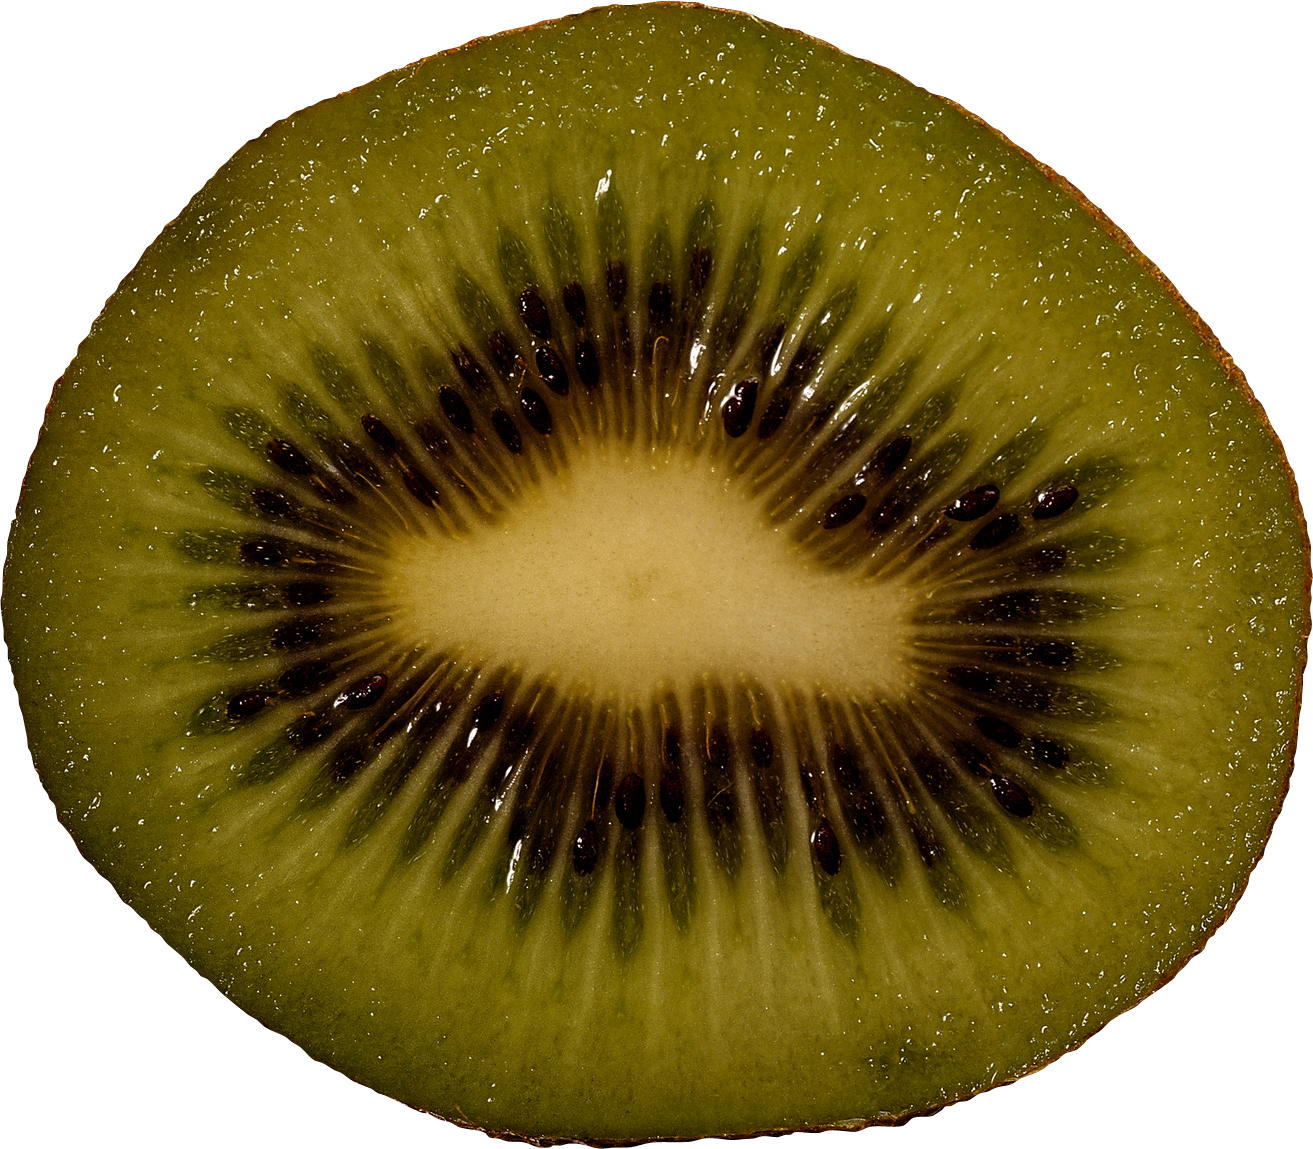 Quả kiwi